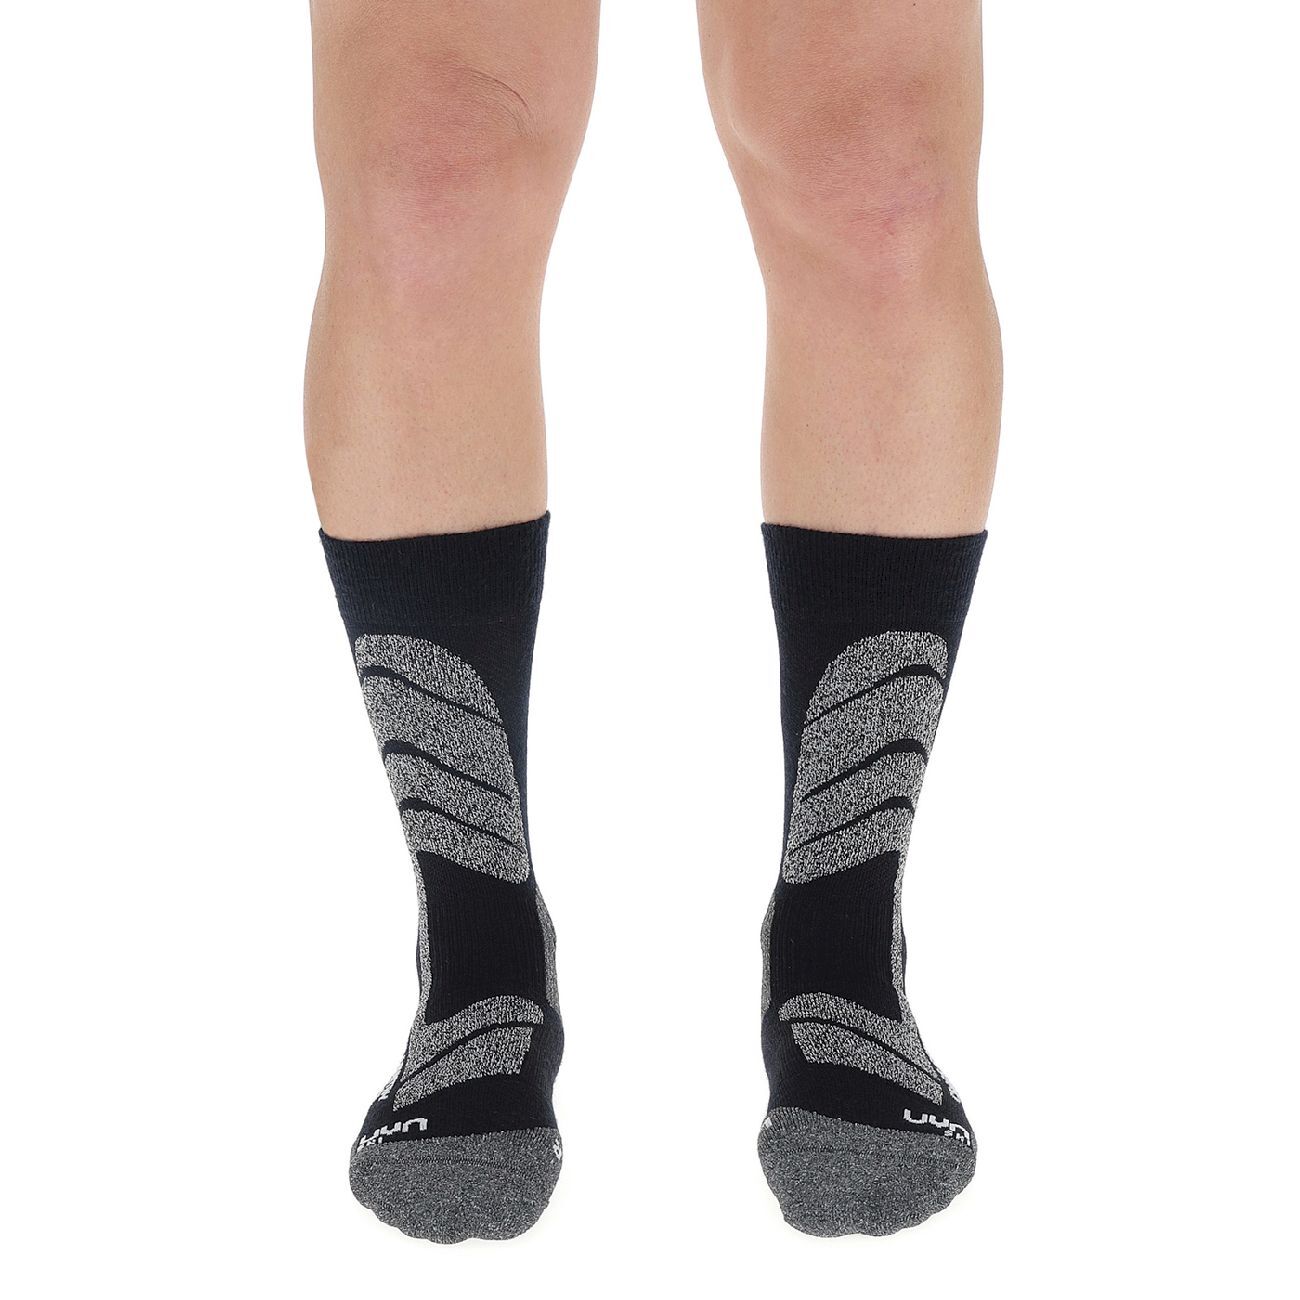 Uyn Ski Cross Country Socks - Laskettelusukat - Miehet